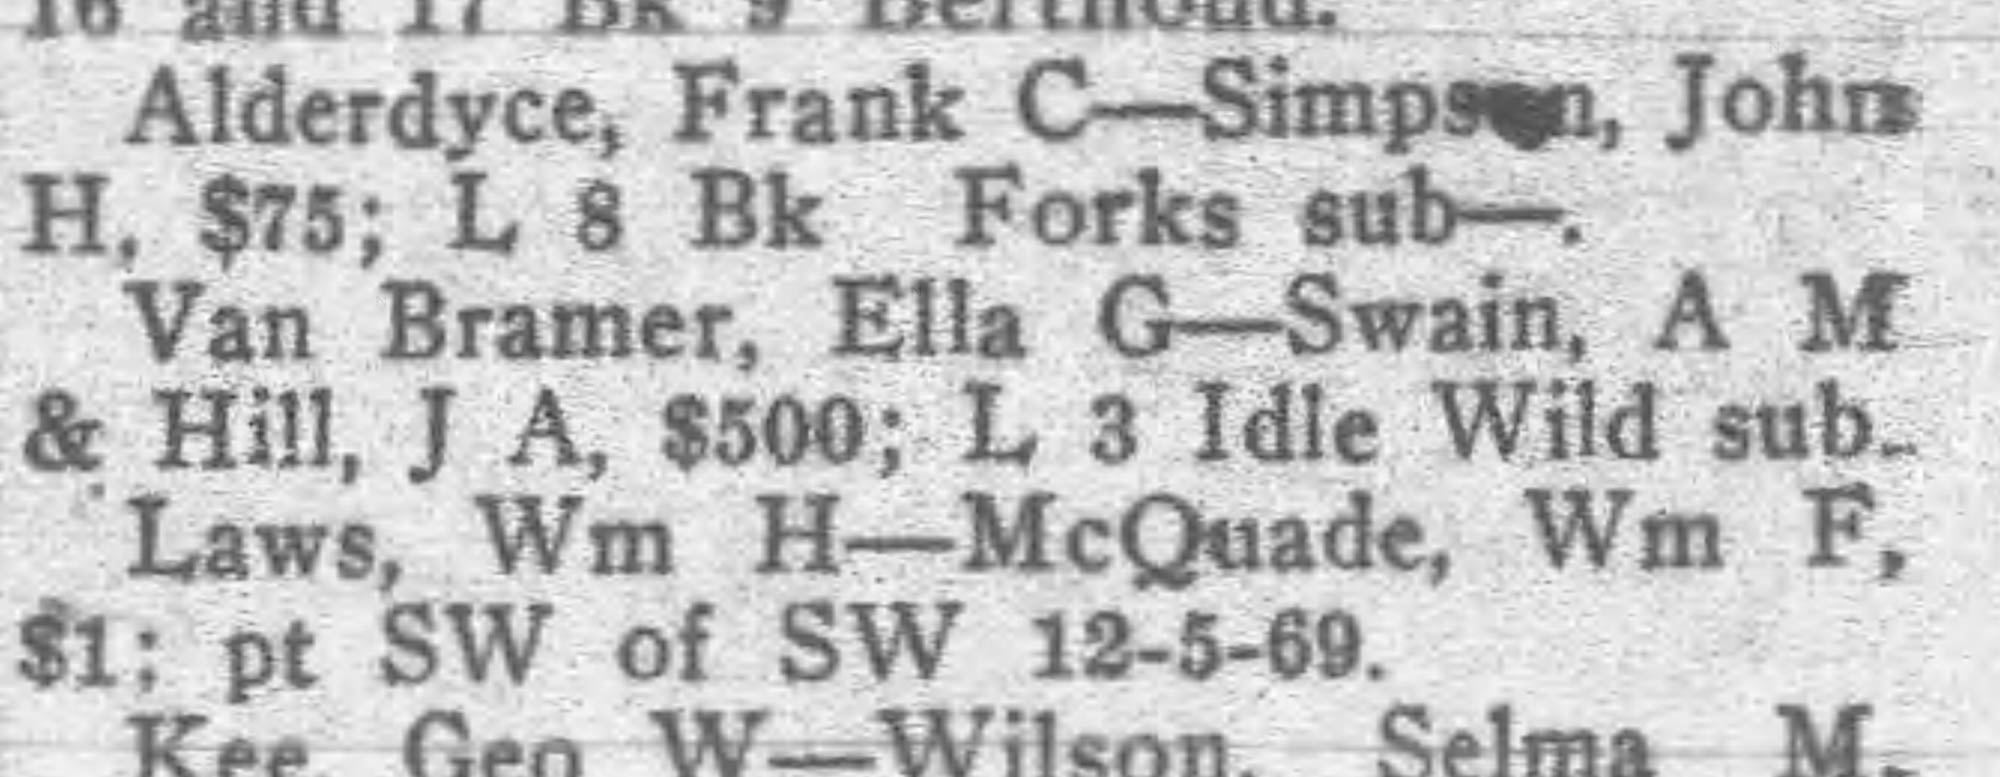 Idlewild Lodge - idlewildlodge.github.io - 1911-05-18 - The Fort Collins Express - Ella Van Bramer Sells Idlewild Lot 3 to AM Swain and JA Hill